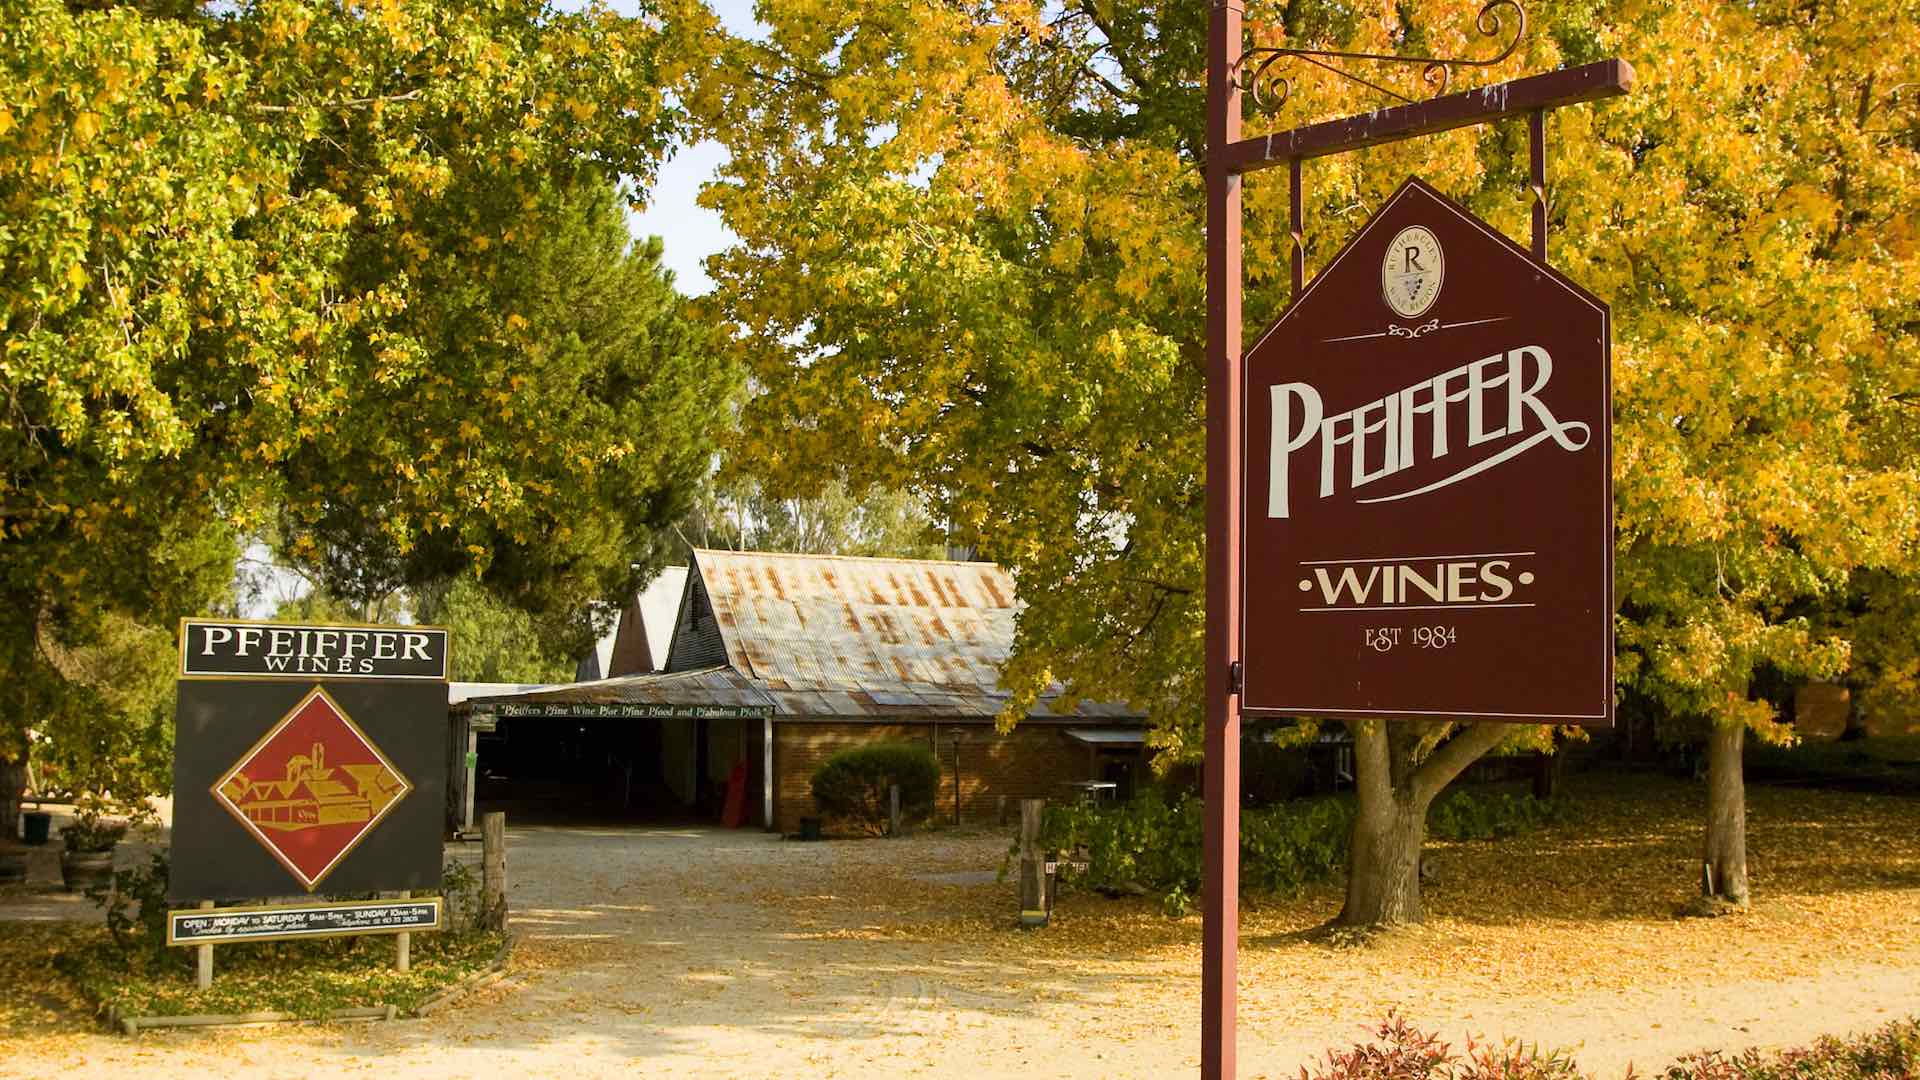 Pfeiffer Wines in the Murray region, Victoria